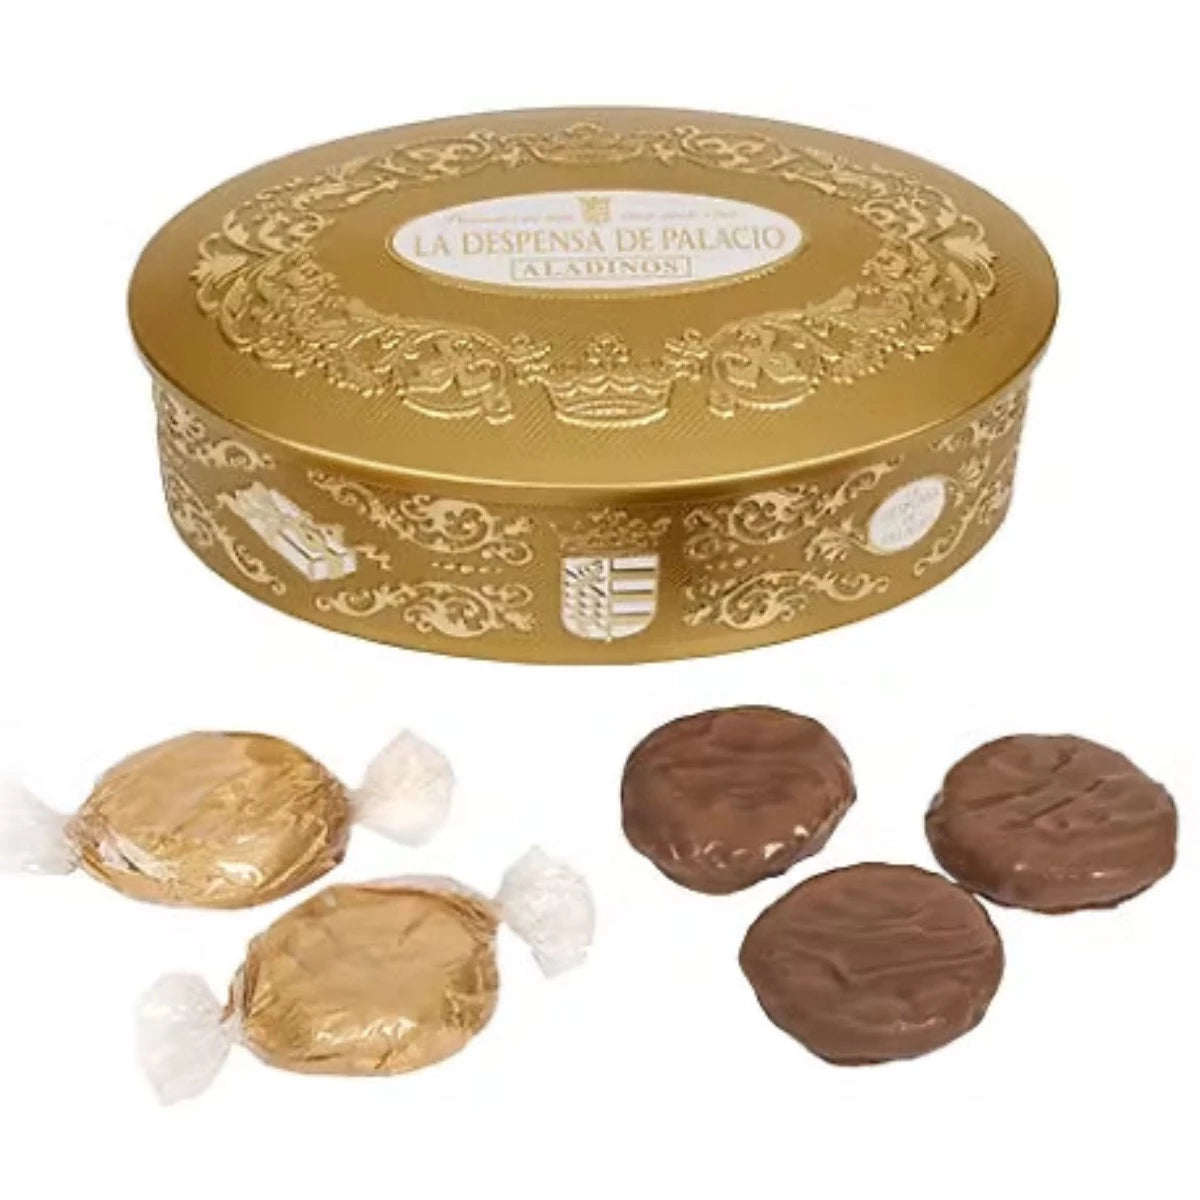 La Despensa de Palacio Spanish Chocolate Biscuits Aladinos in Decorative Tin 170g